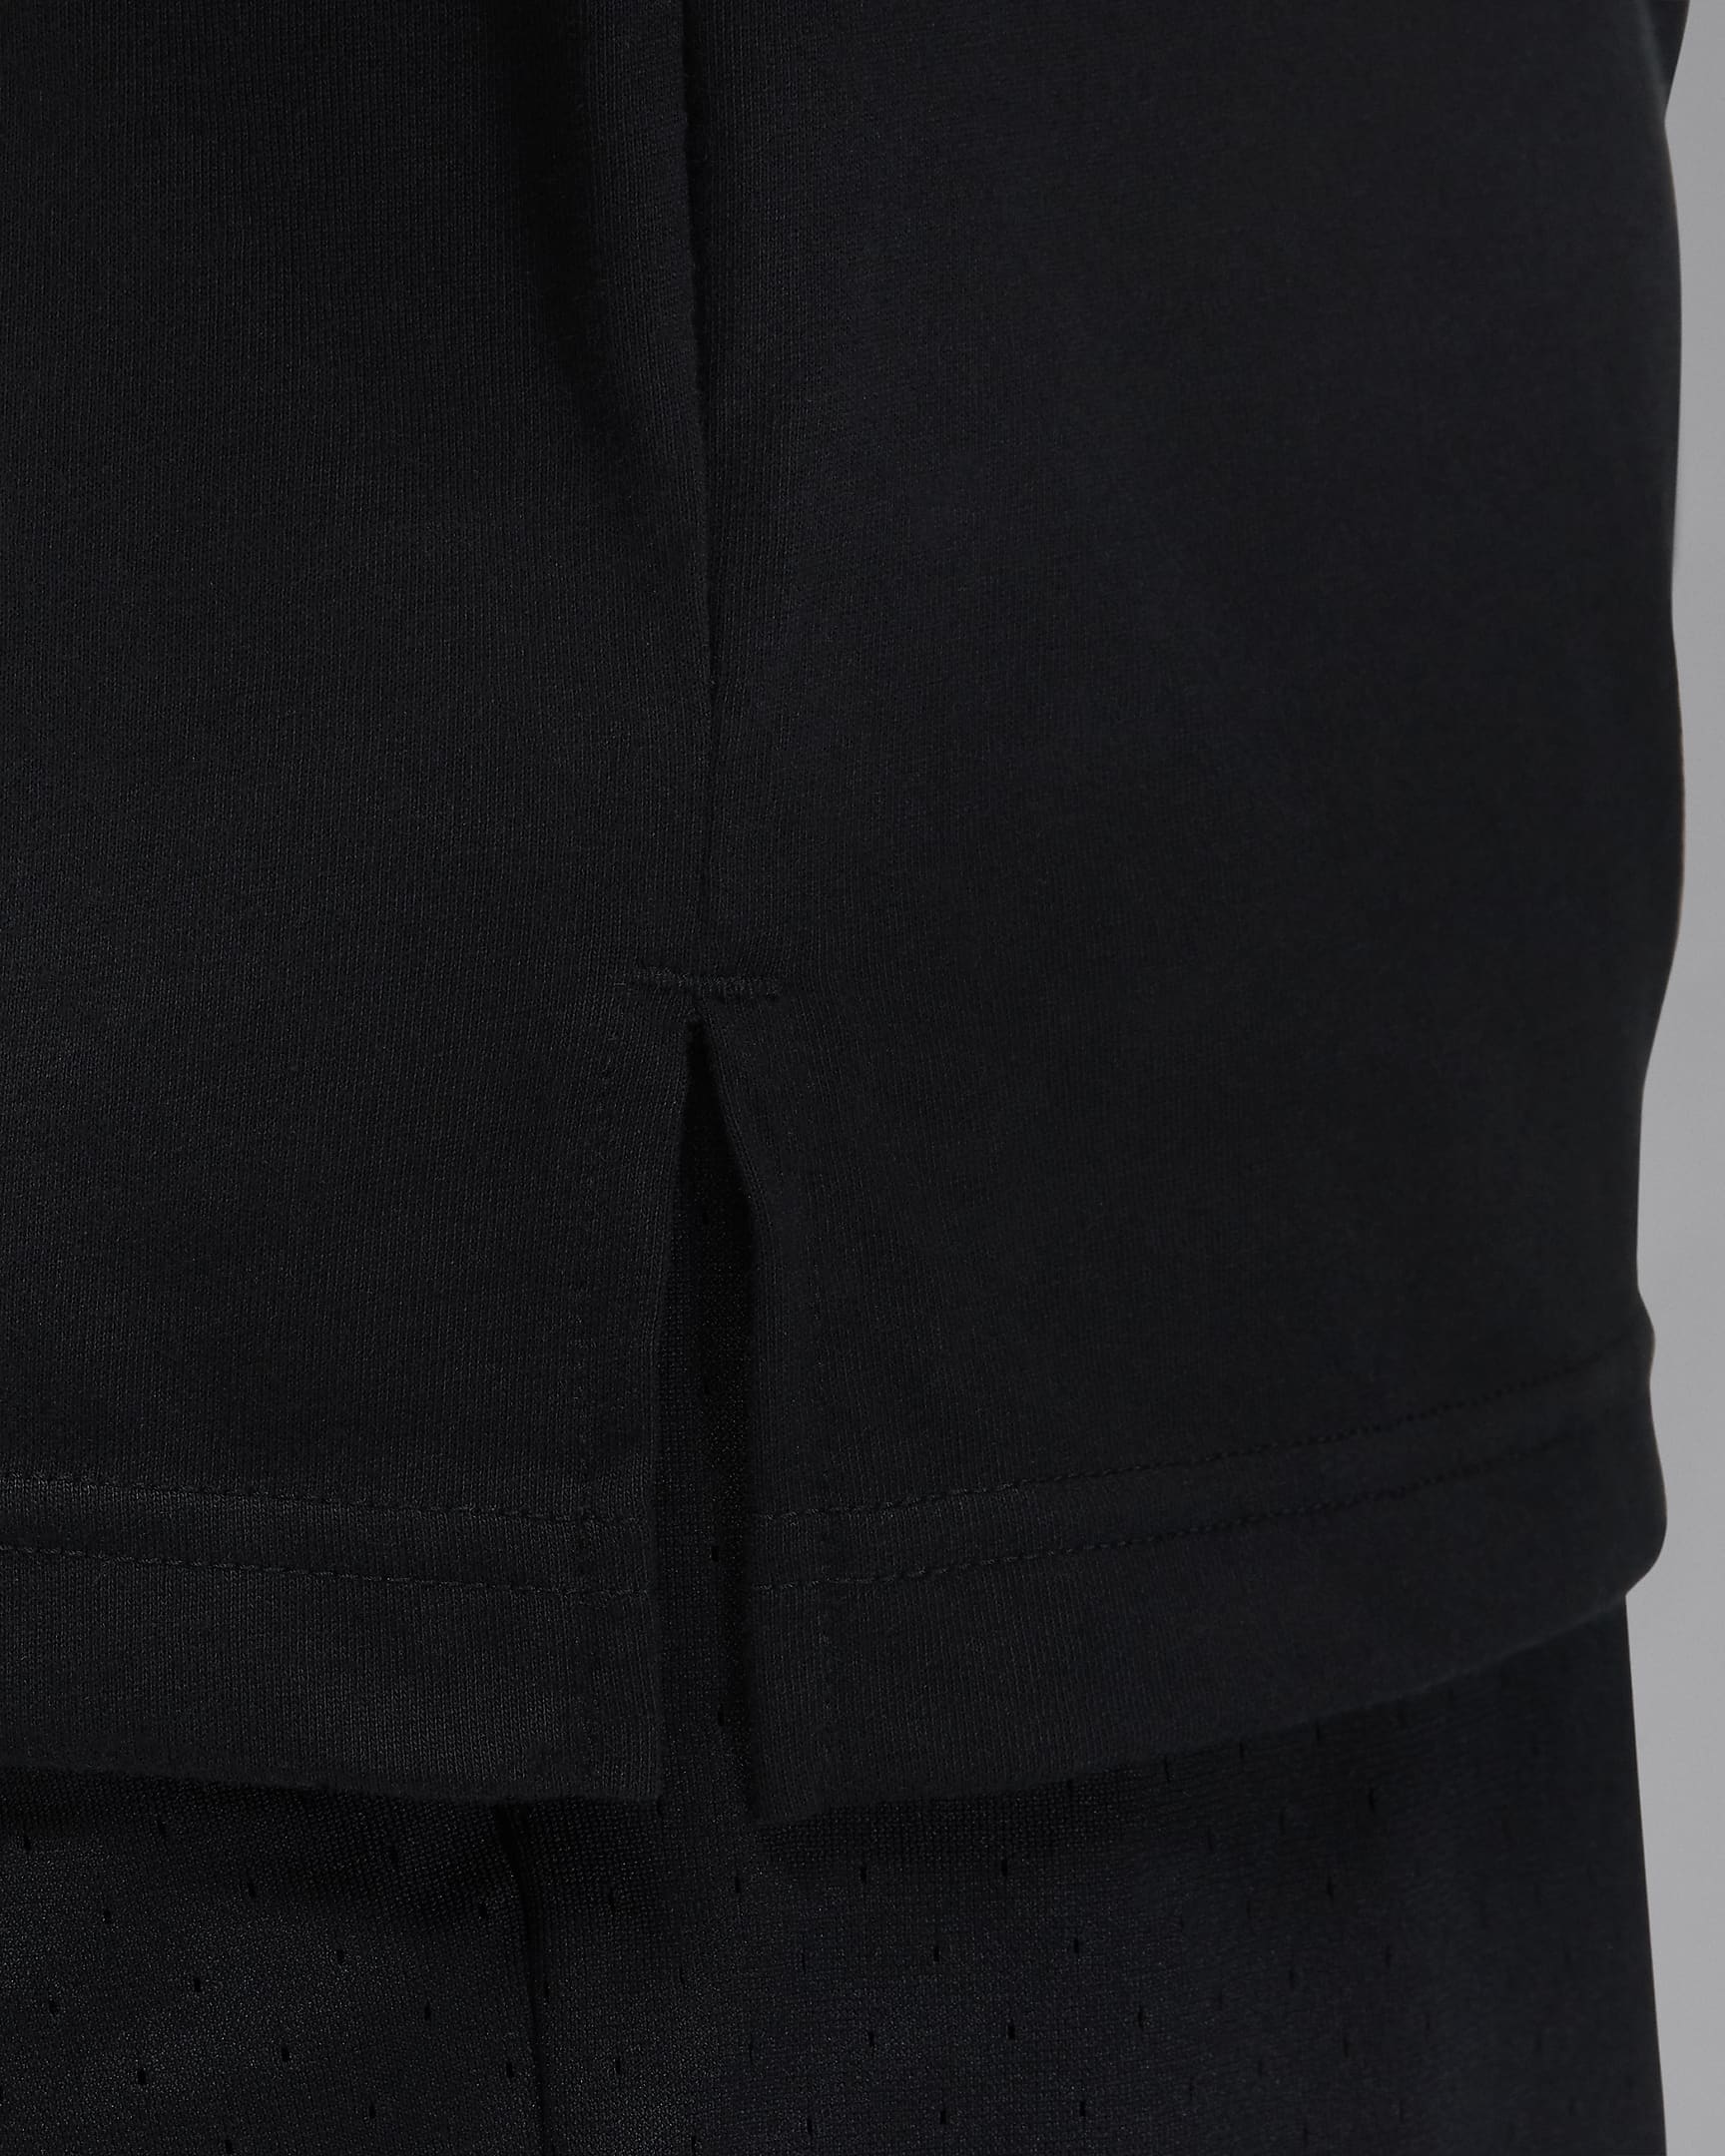 Camisola de manga curta Dri-FIT Jordan Sport para homem - Preto/Branco